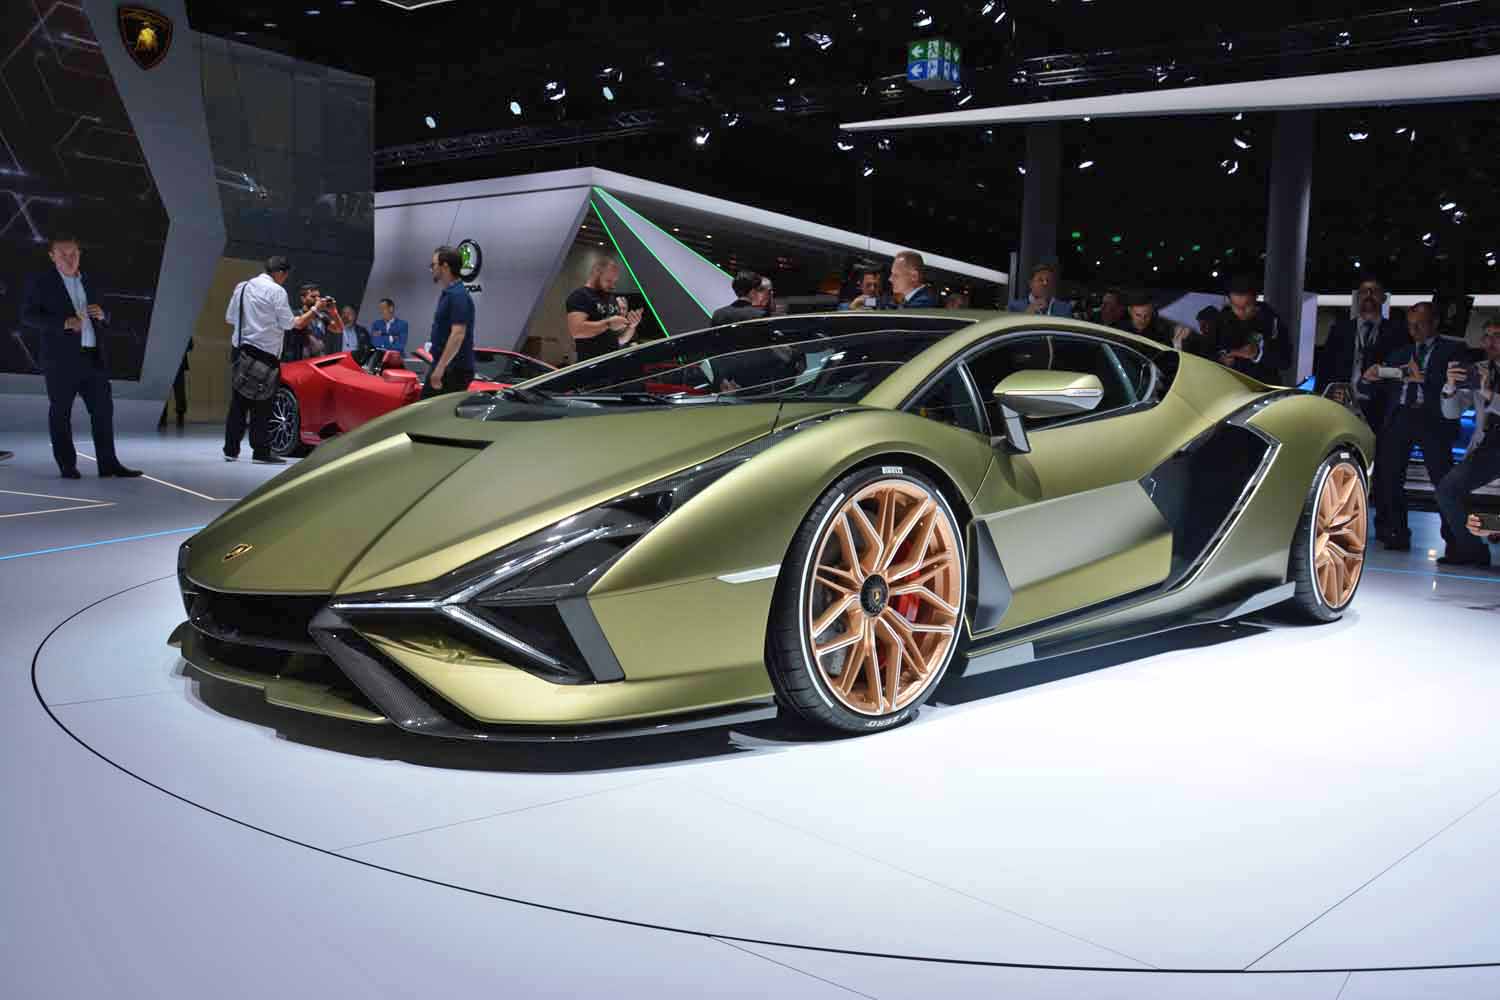 2020 Lamborghini Sian Is a High-Tech Hypercar With Hybrid Power